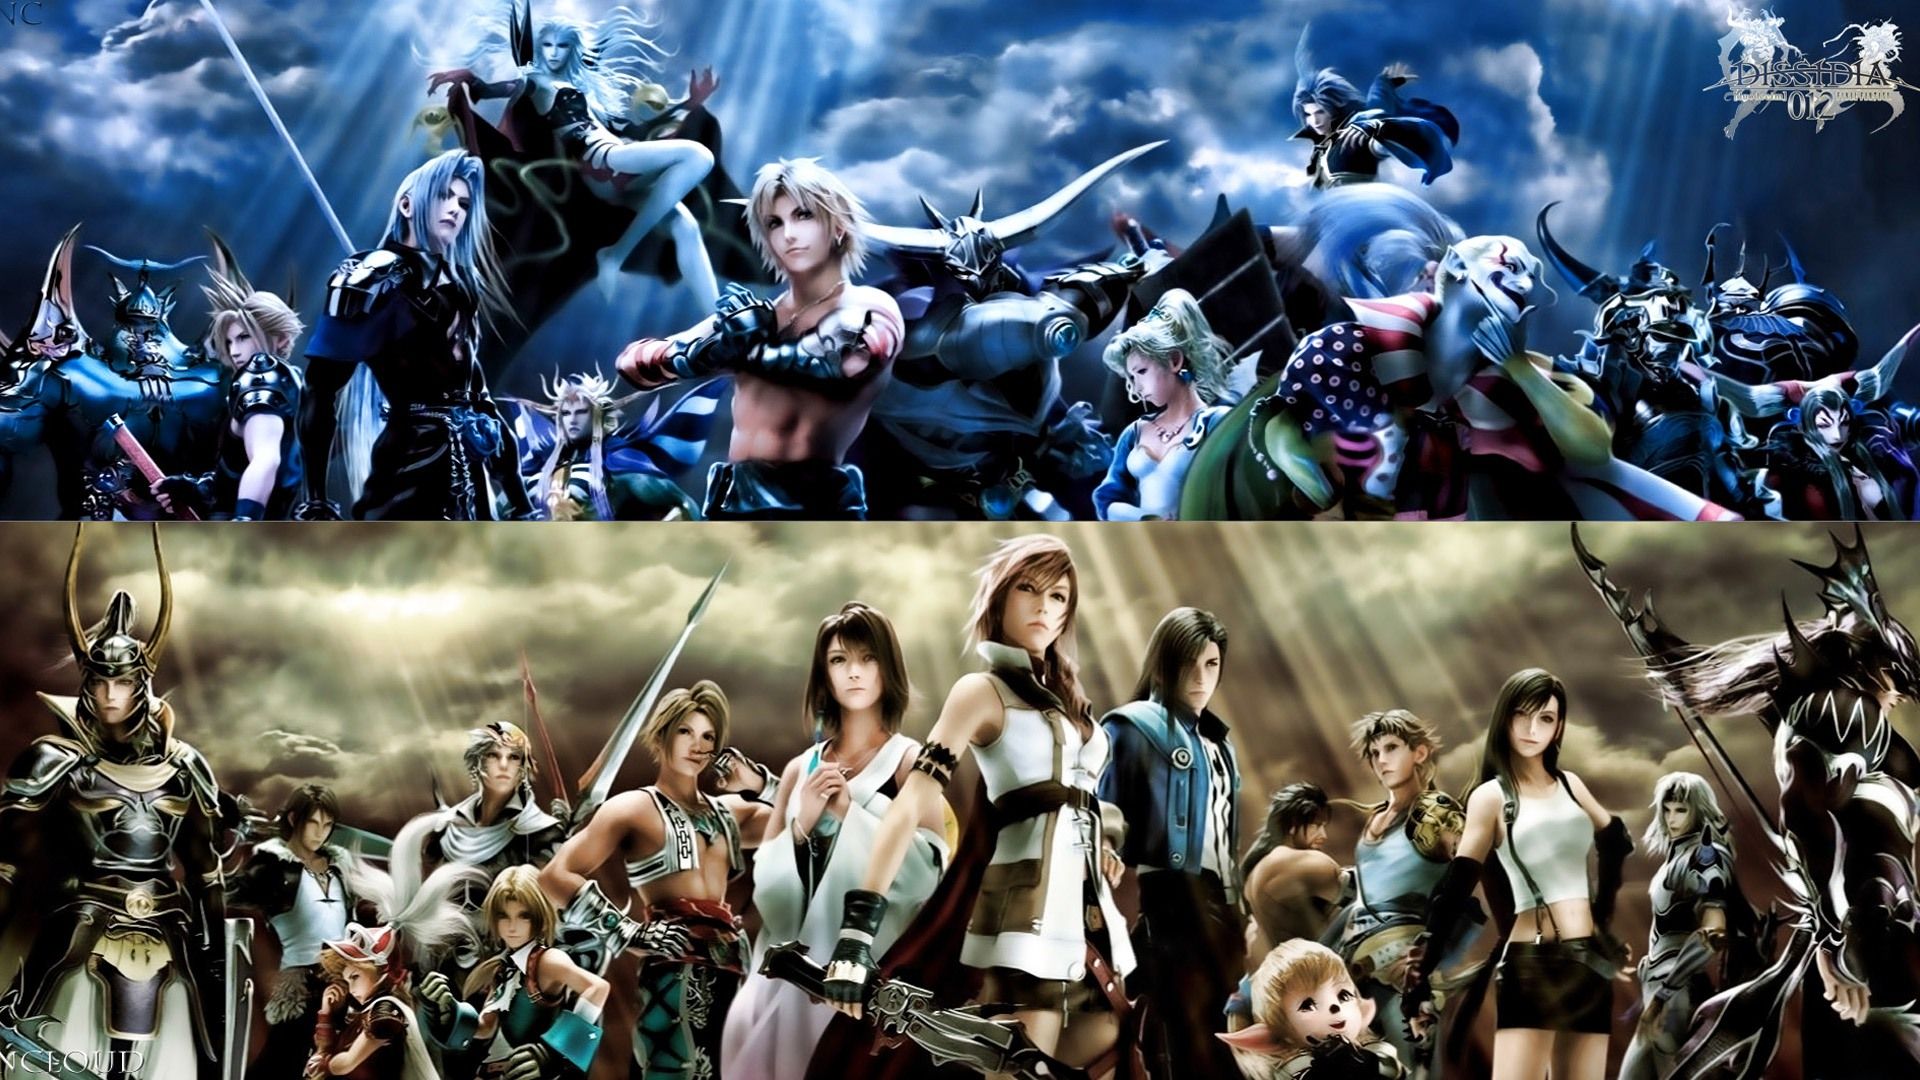 100% Quality HD Final Fantasy Image, Wallpaper for Desktop, B.SCB Wallpaper